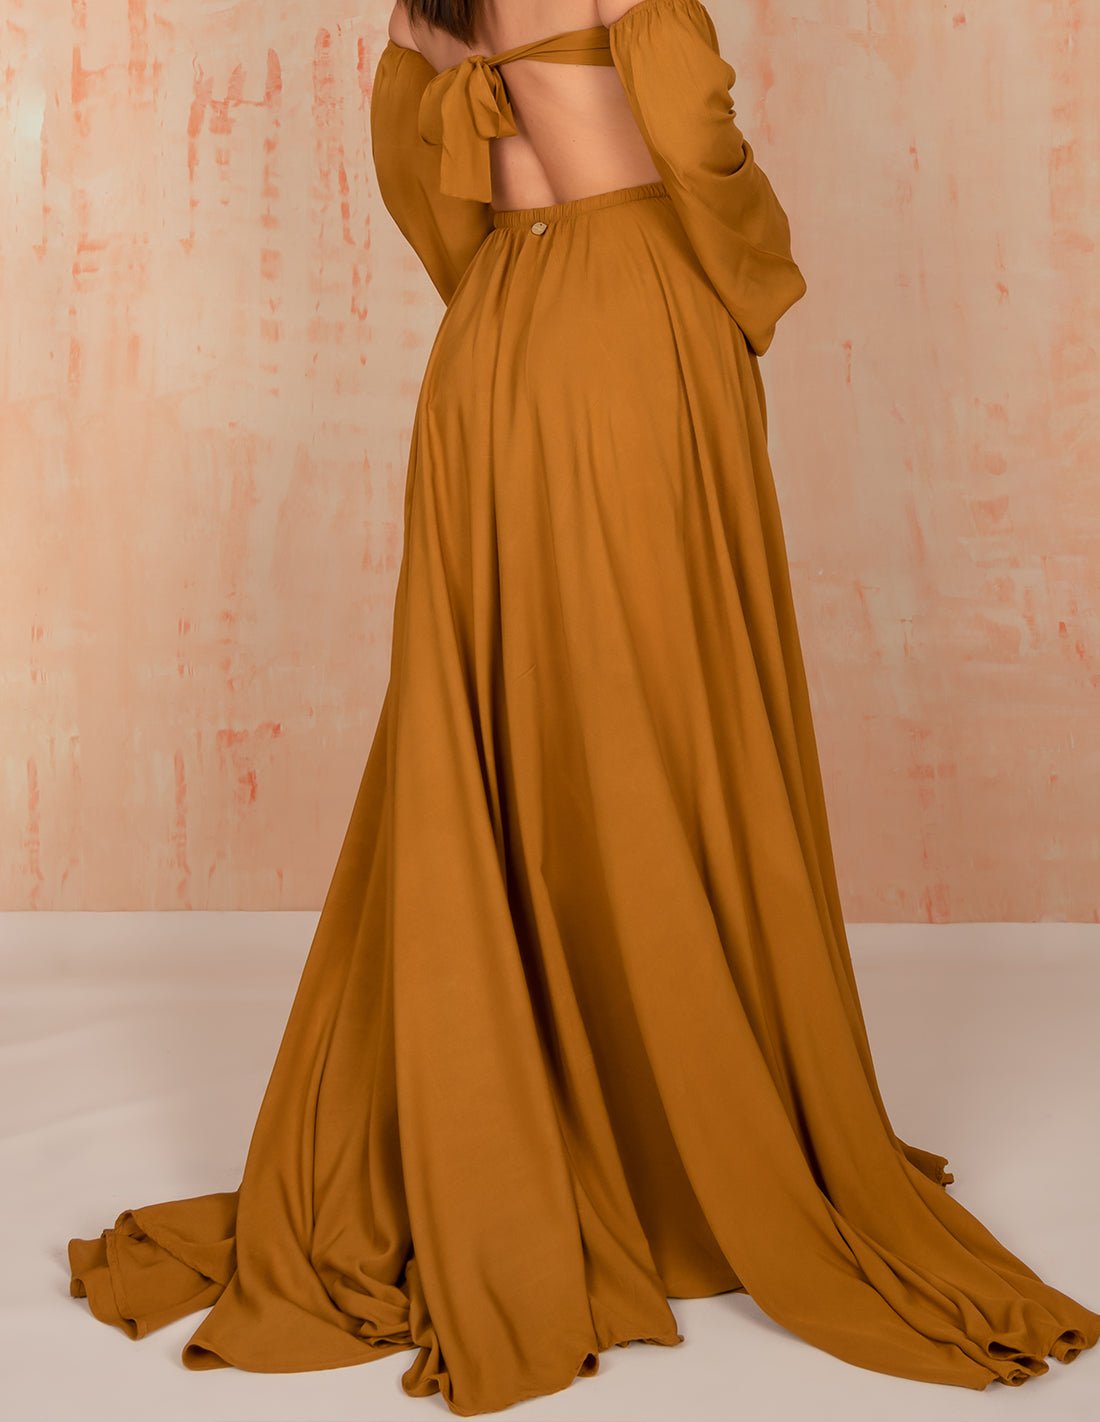 Waterfall Skirt Golden - Skirt - Entreaguas Wearable Art